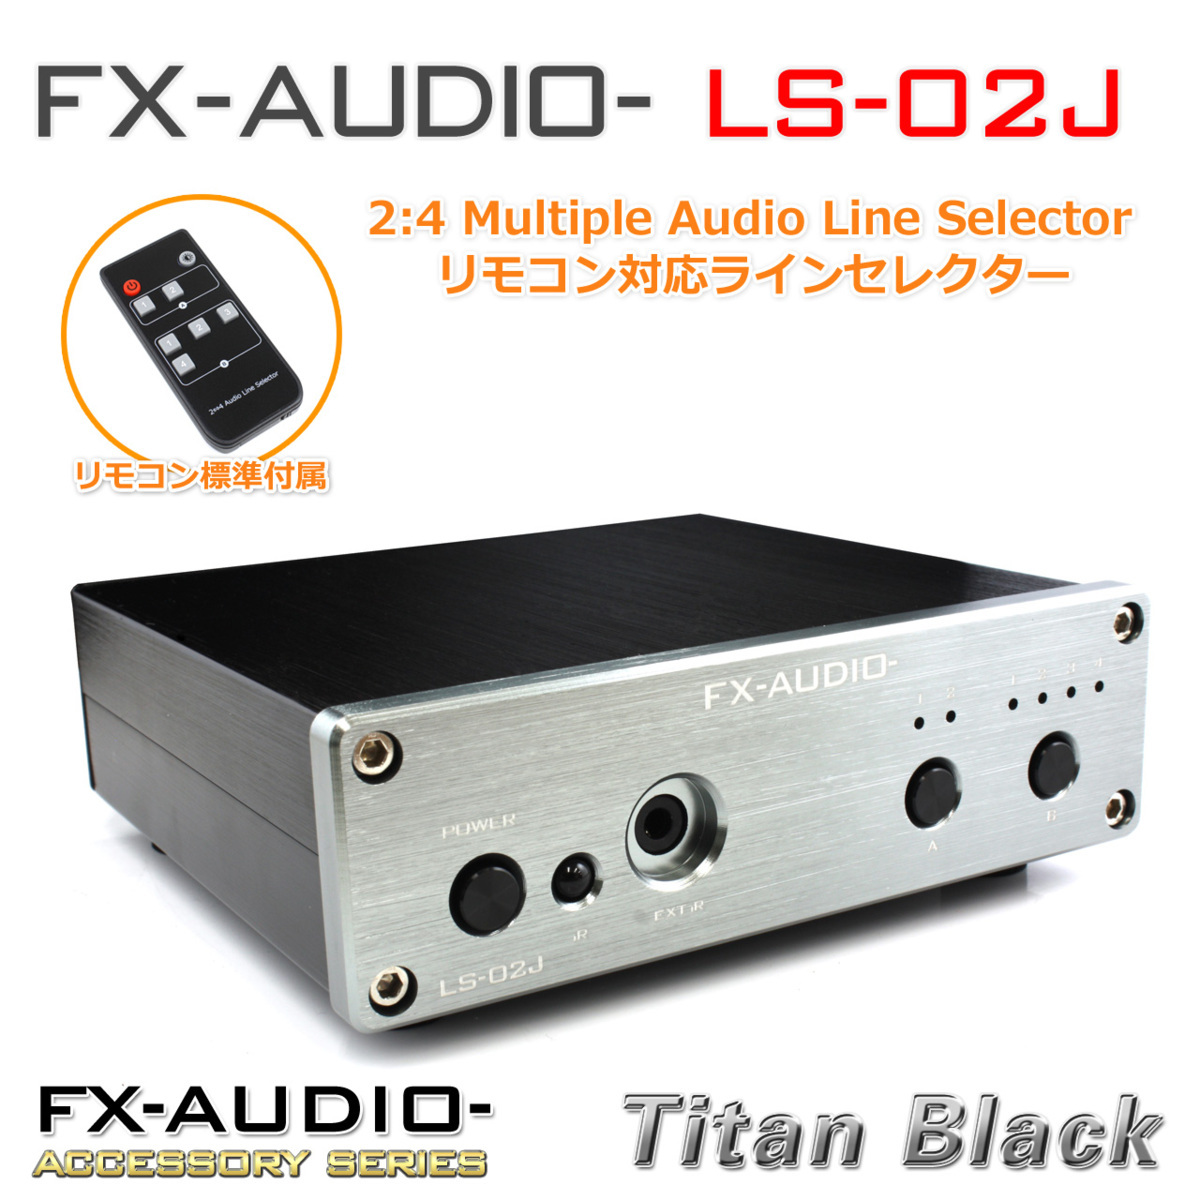 FX-AUDIO- LS-02J [チタンブラック]リモコン対応 2:4 Multiple Audio Line Selector RCA 切替器 セレクターの画像1